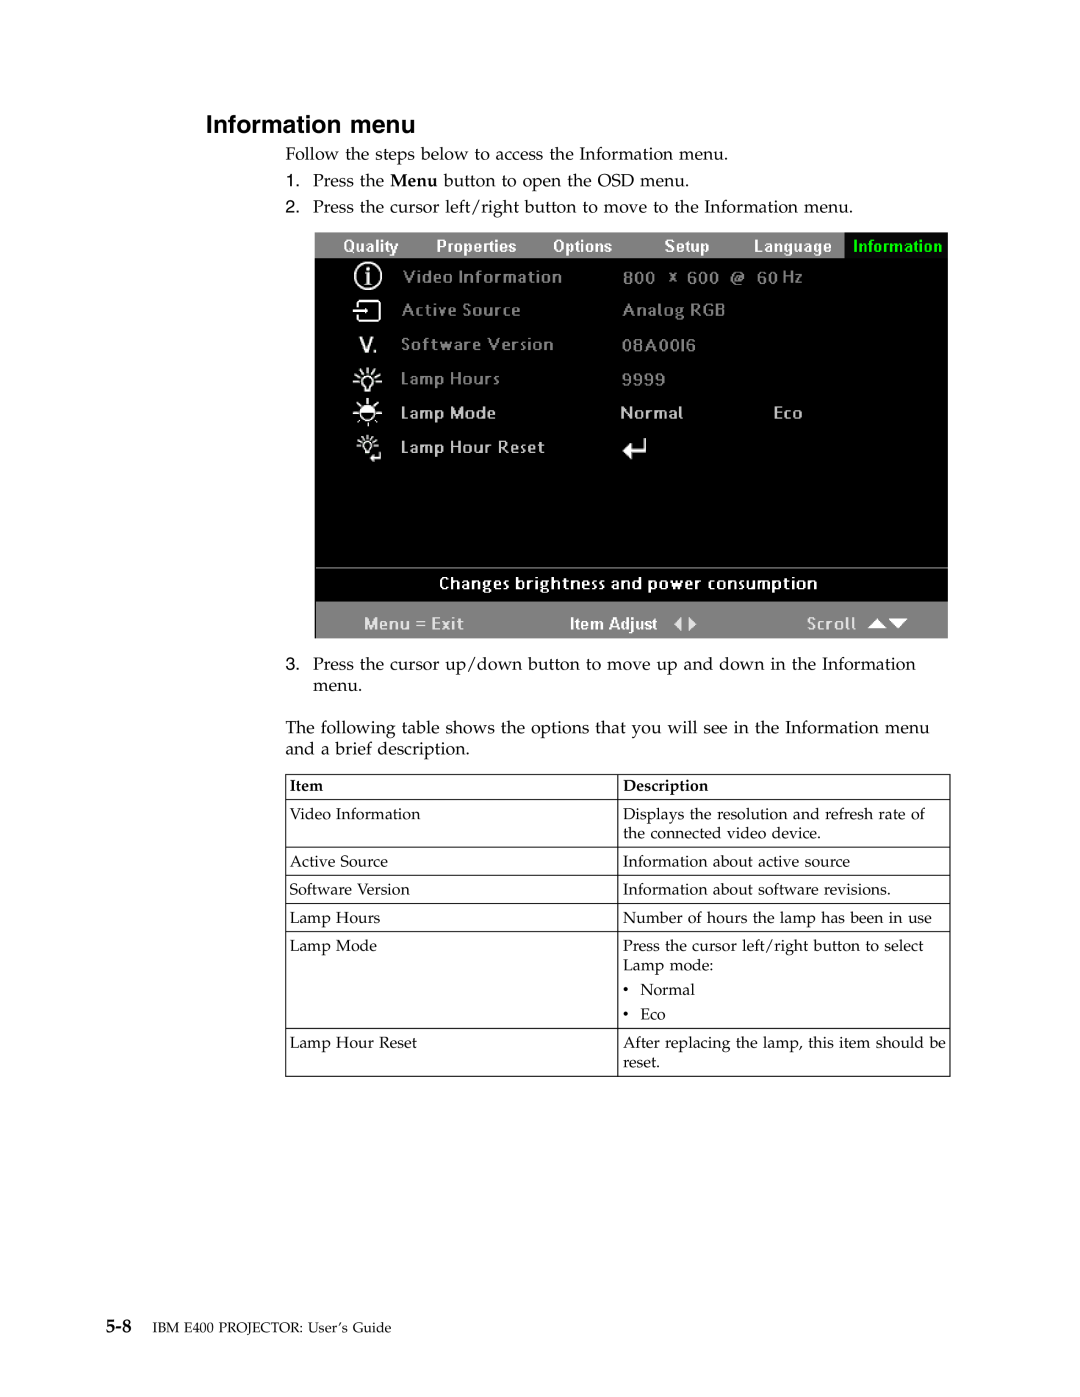 IBM Partner Pavilion PROJECTOR E400 manual Information menu, IBM E400 PROJECTOR User’s Guide 